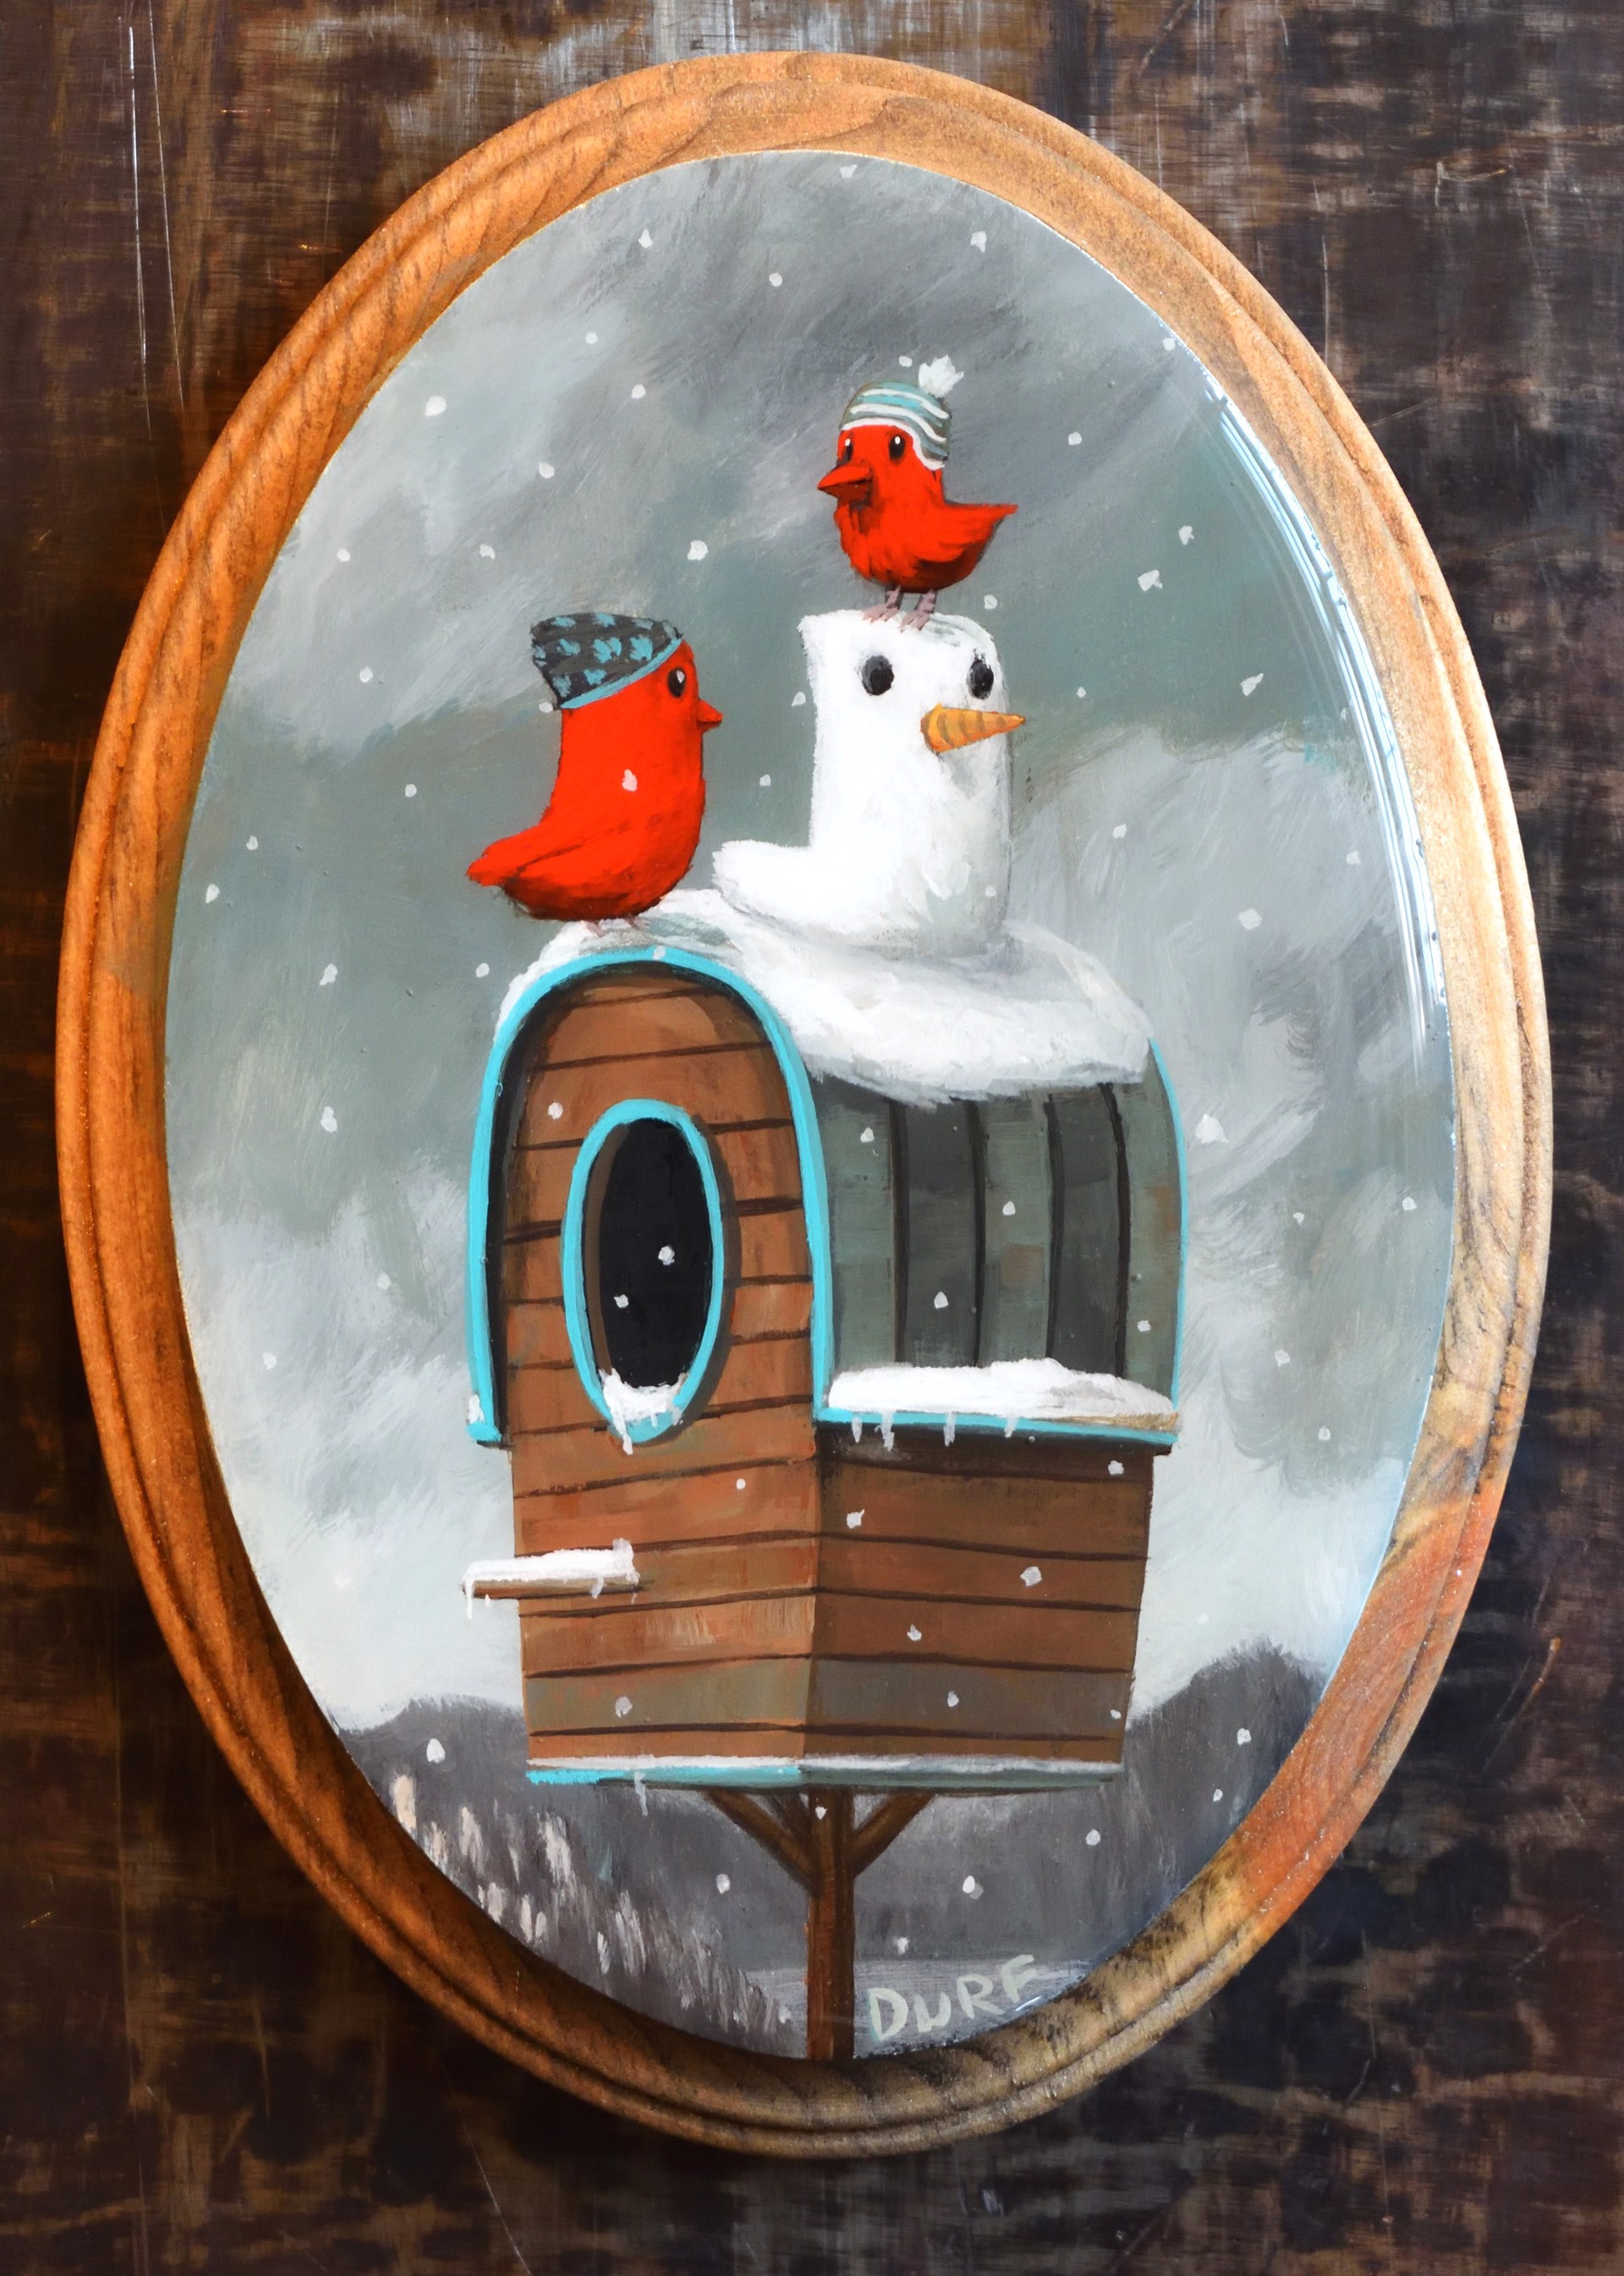 Making Snowbirds by Nathan Durfee